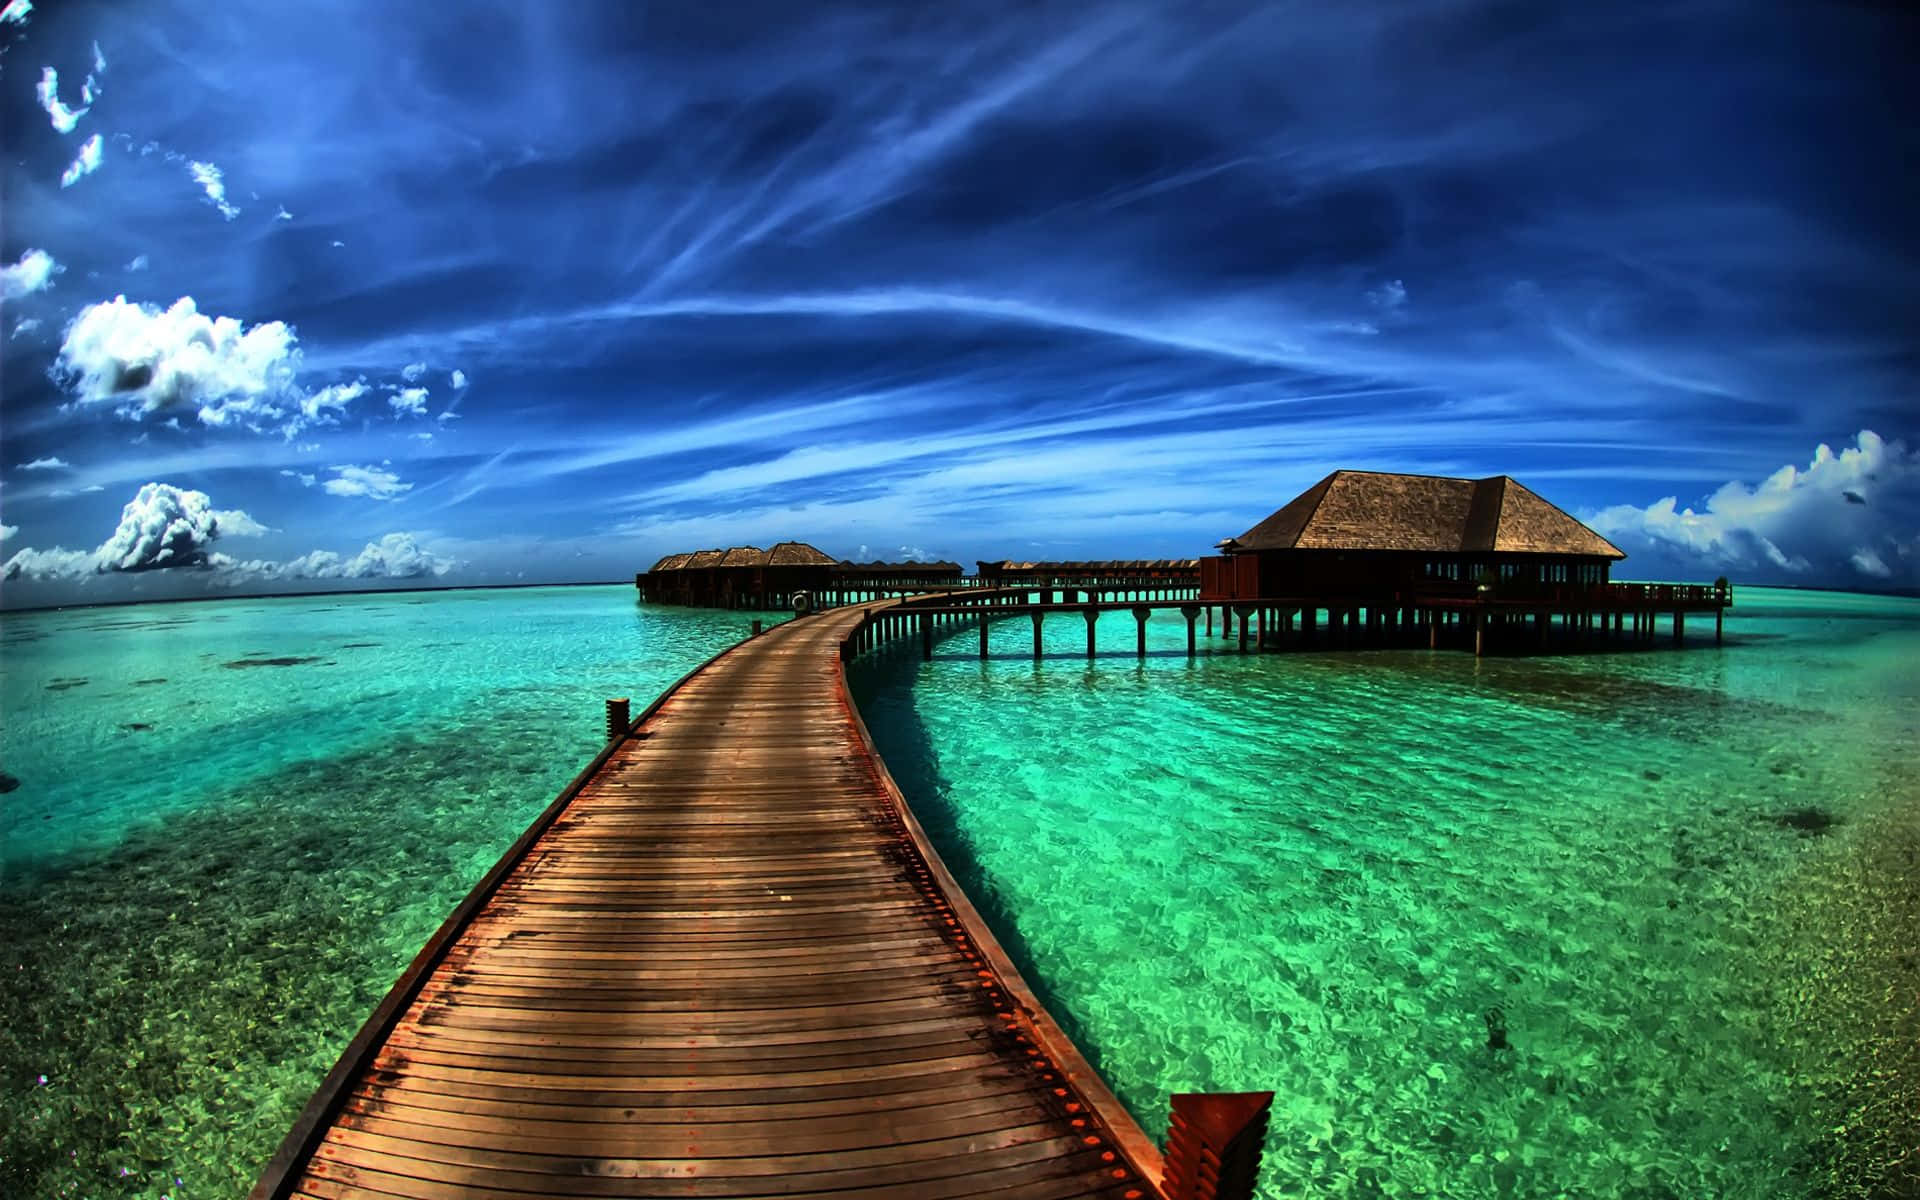 Nyd paradis på jorden i Bora Bora med denne betagende tapet.